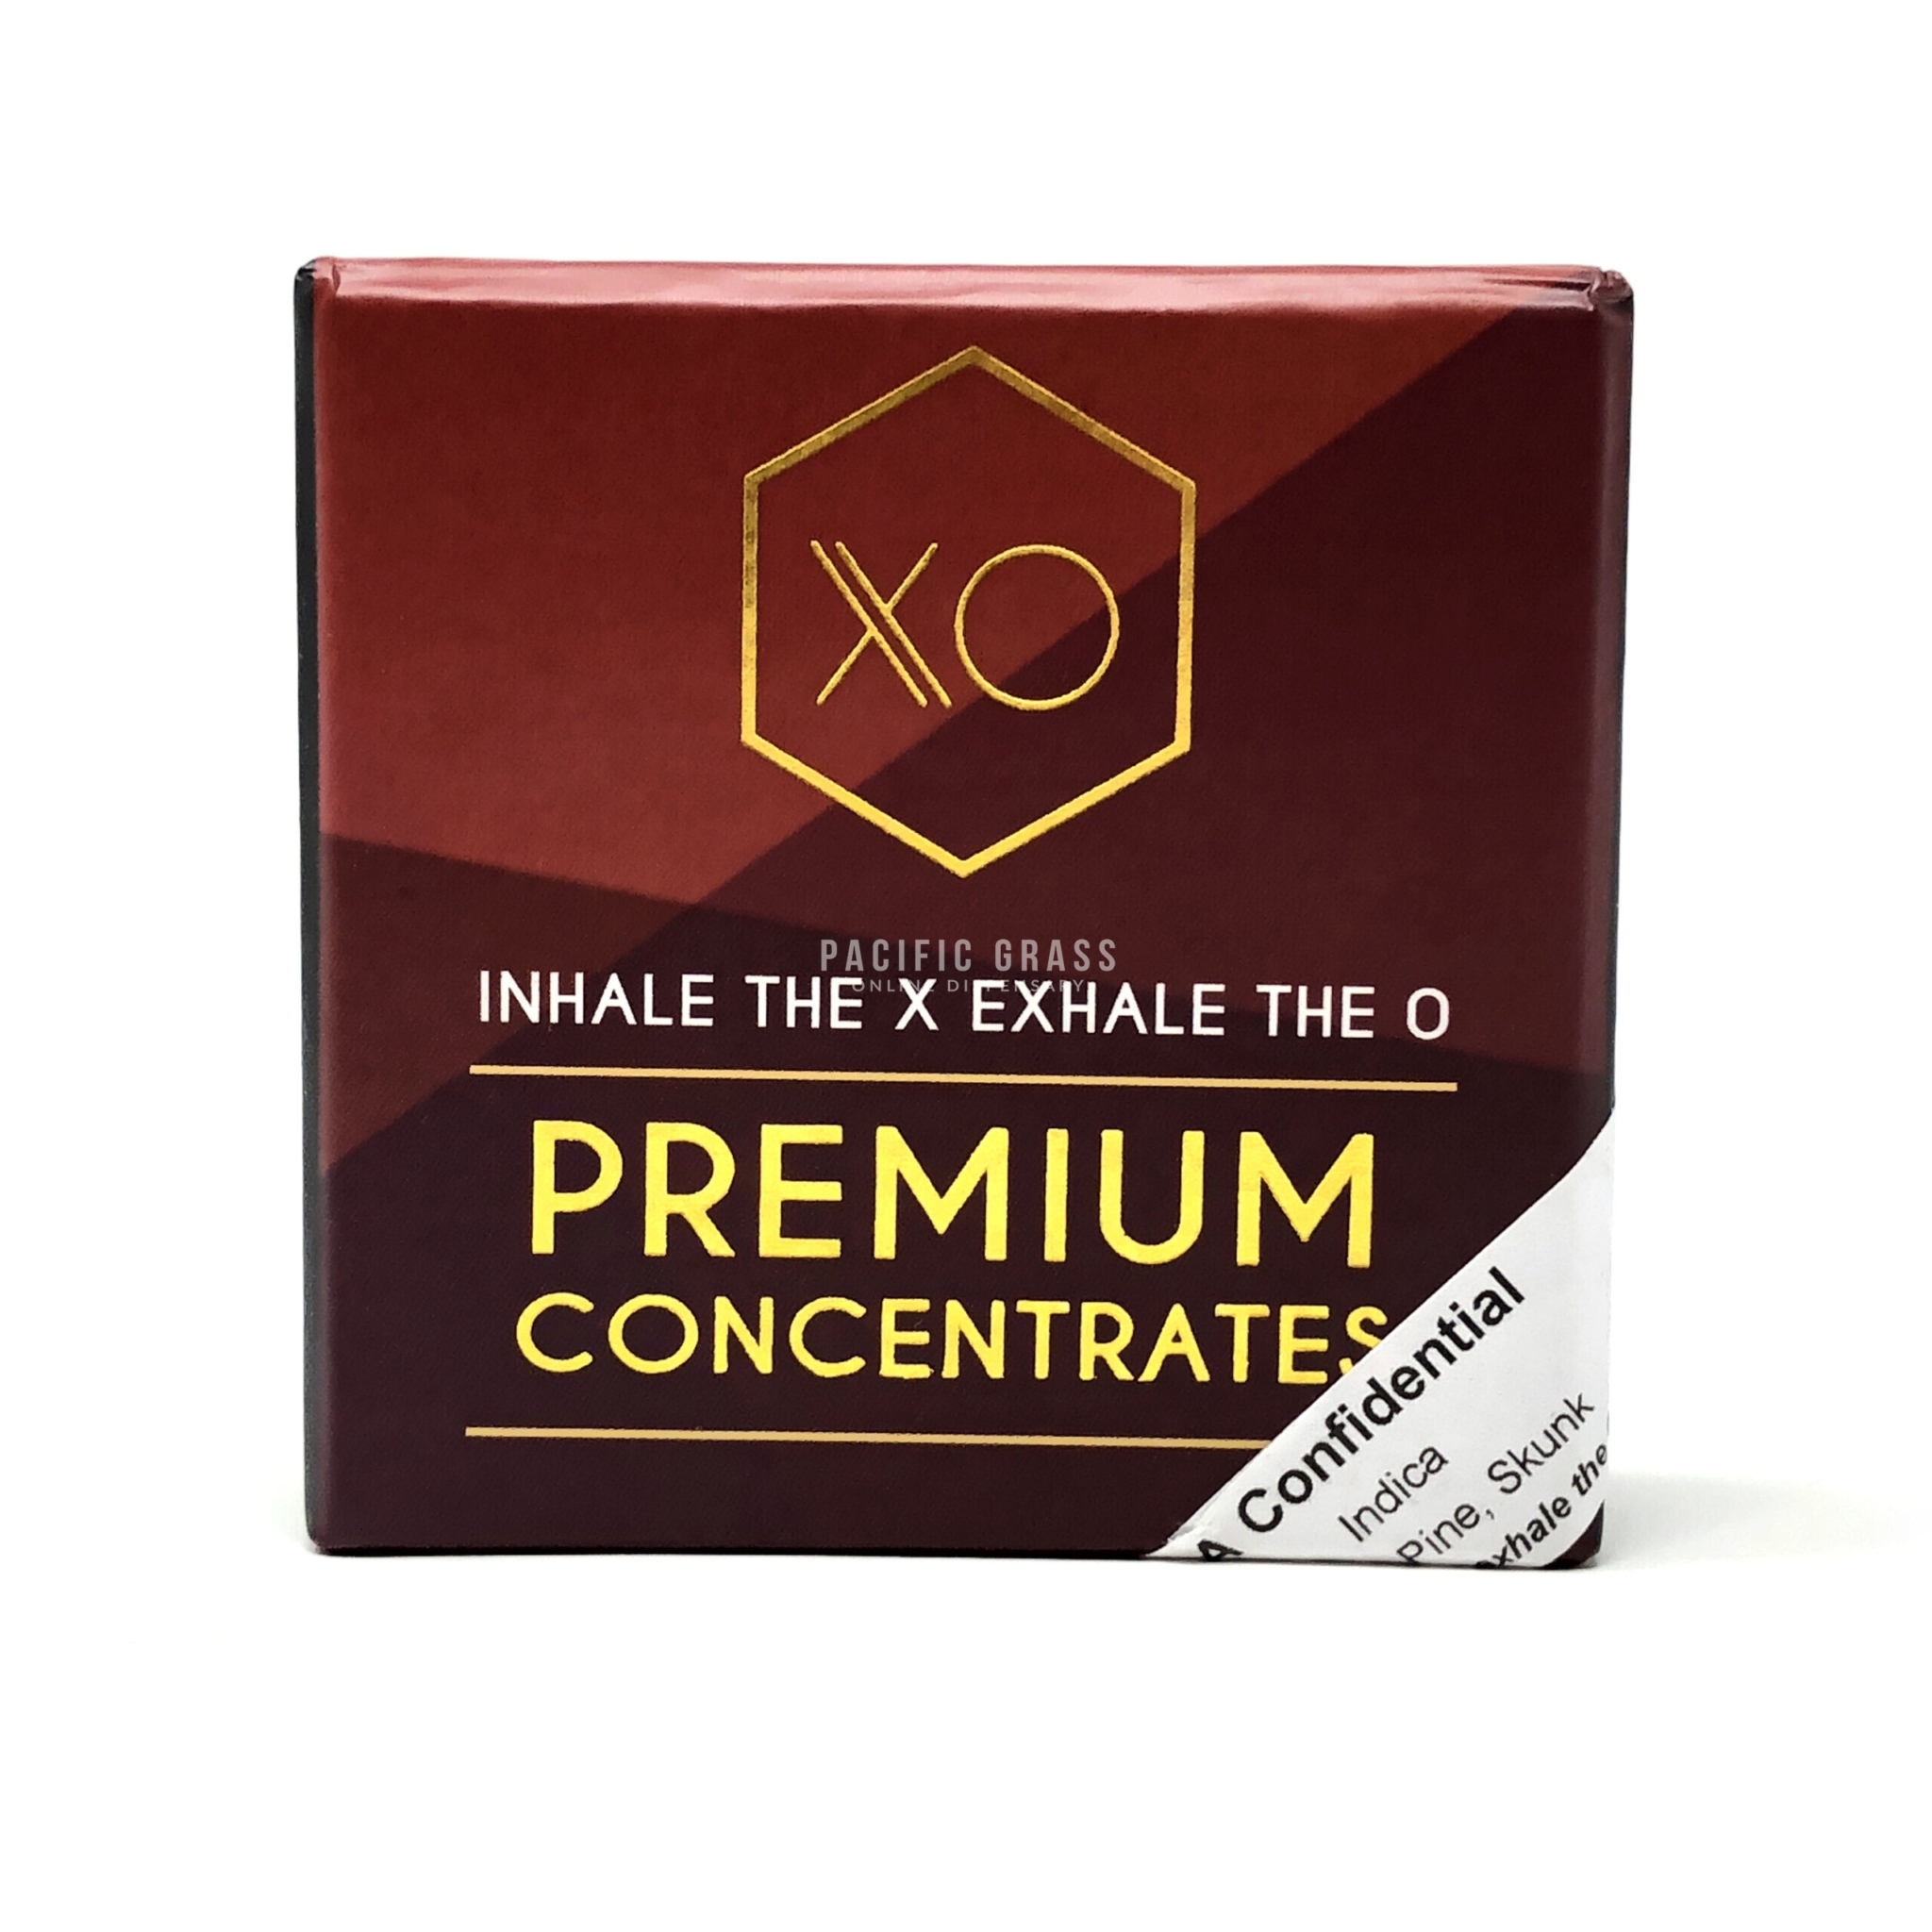 Xo Premium Concentrates – Shatter (2g) – La Confidential